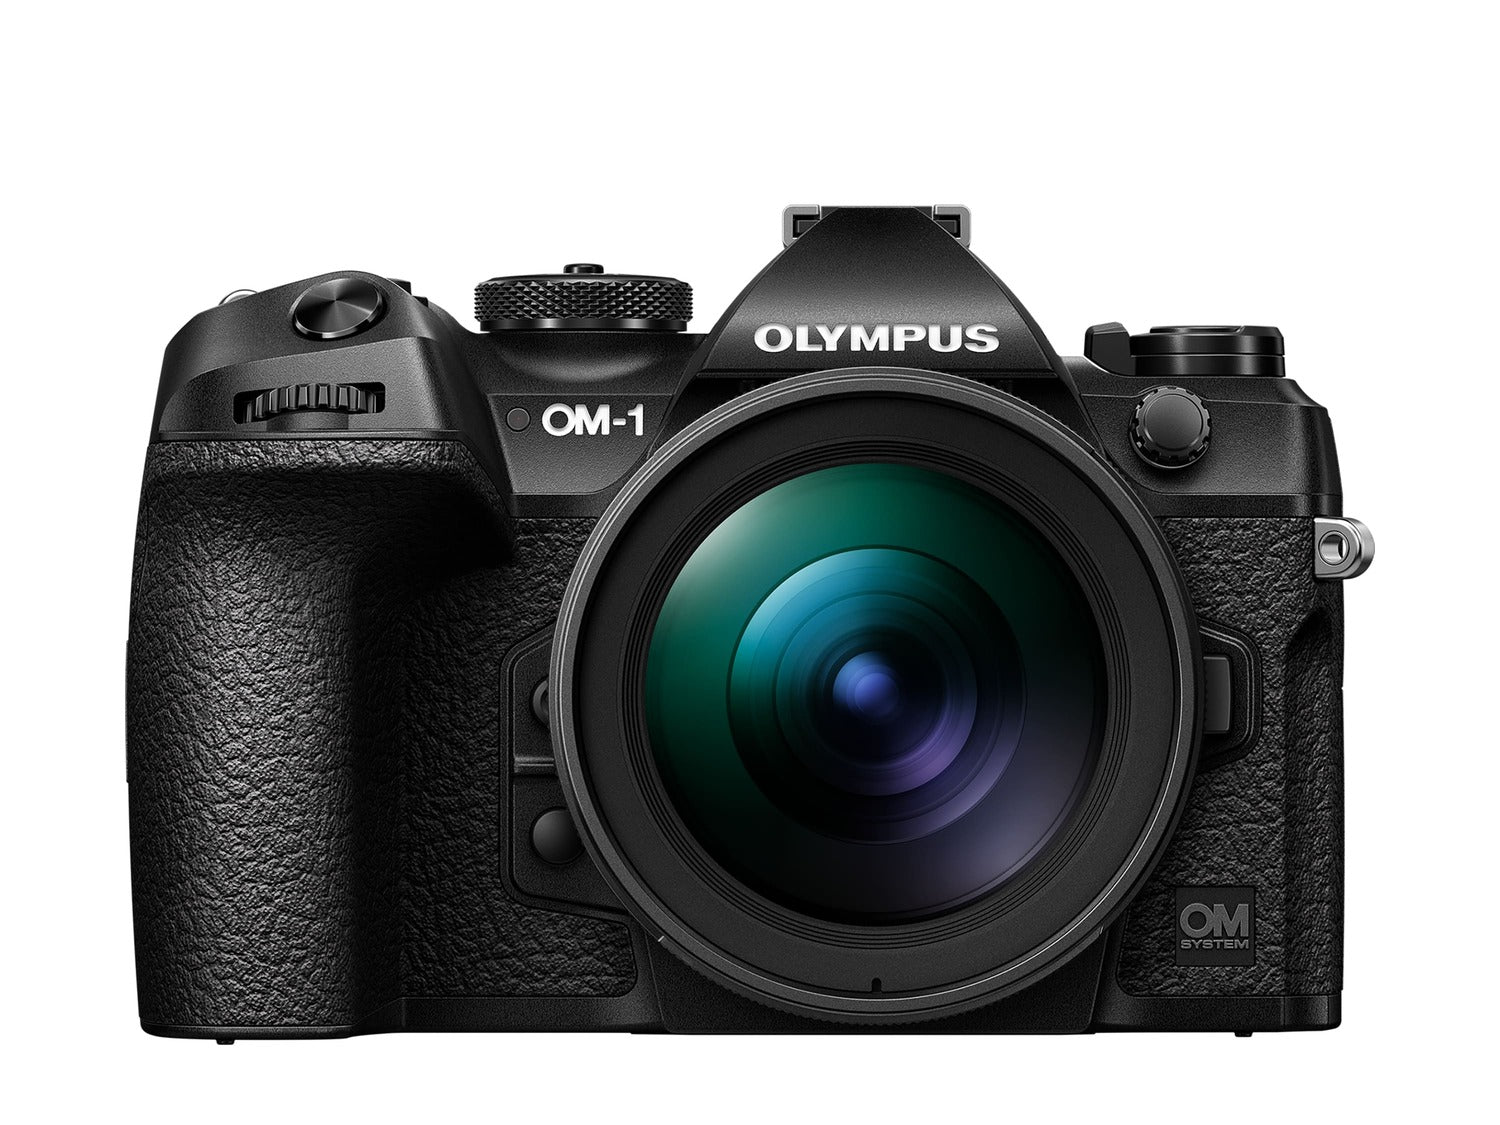 Olympus OM-D E-M10 Mark IV Camera, Silver with Accessories Kit V207130SU000  AK